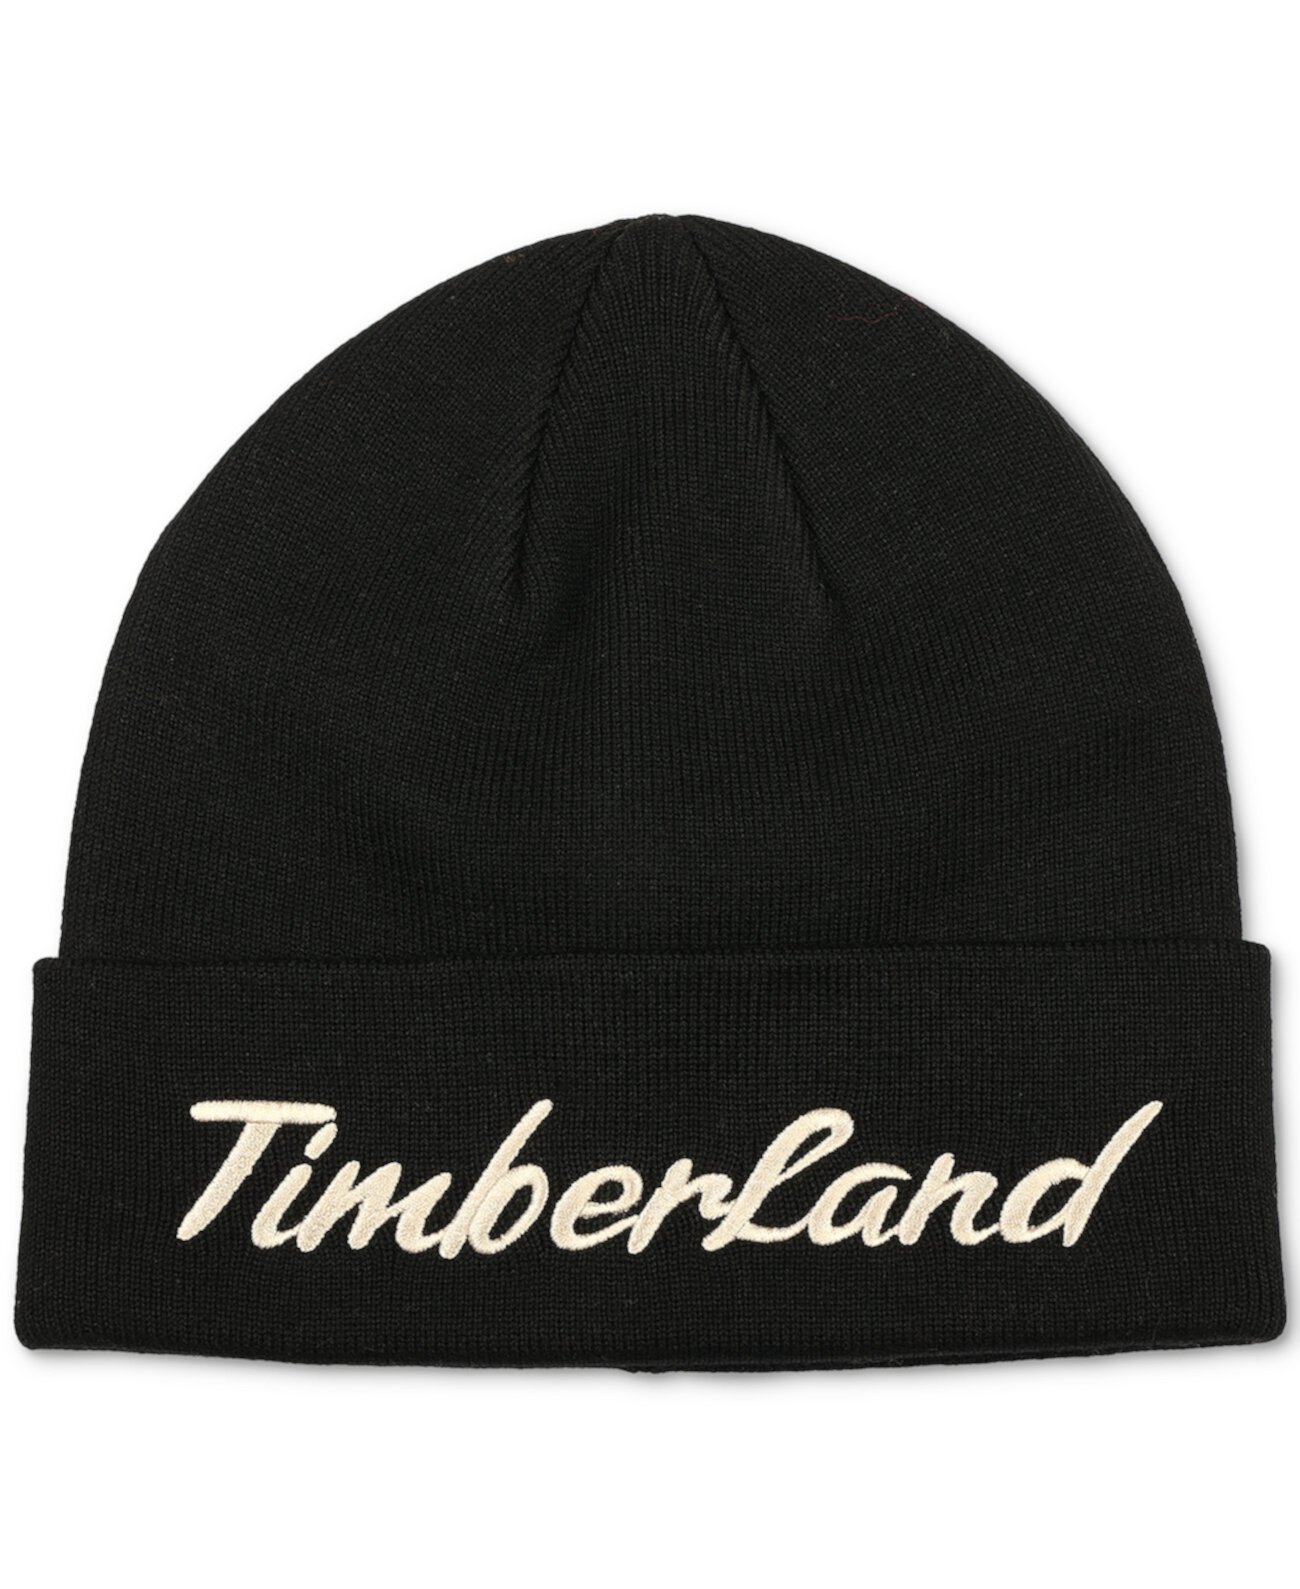 Мужская шапка-бини с вышитым логотипом на манжетах Timberland